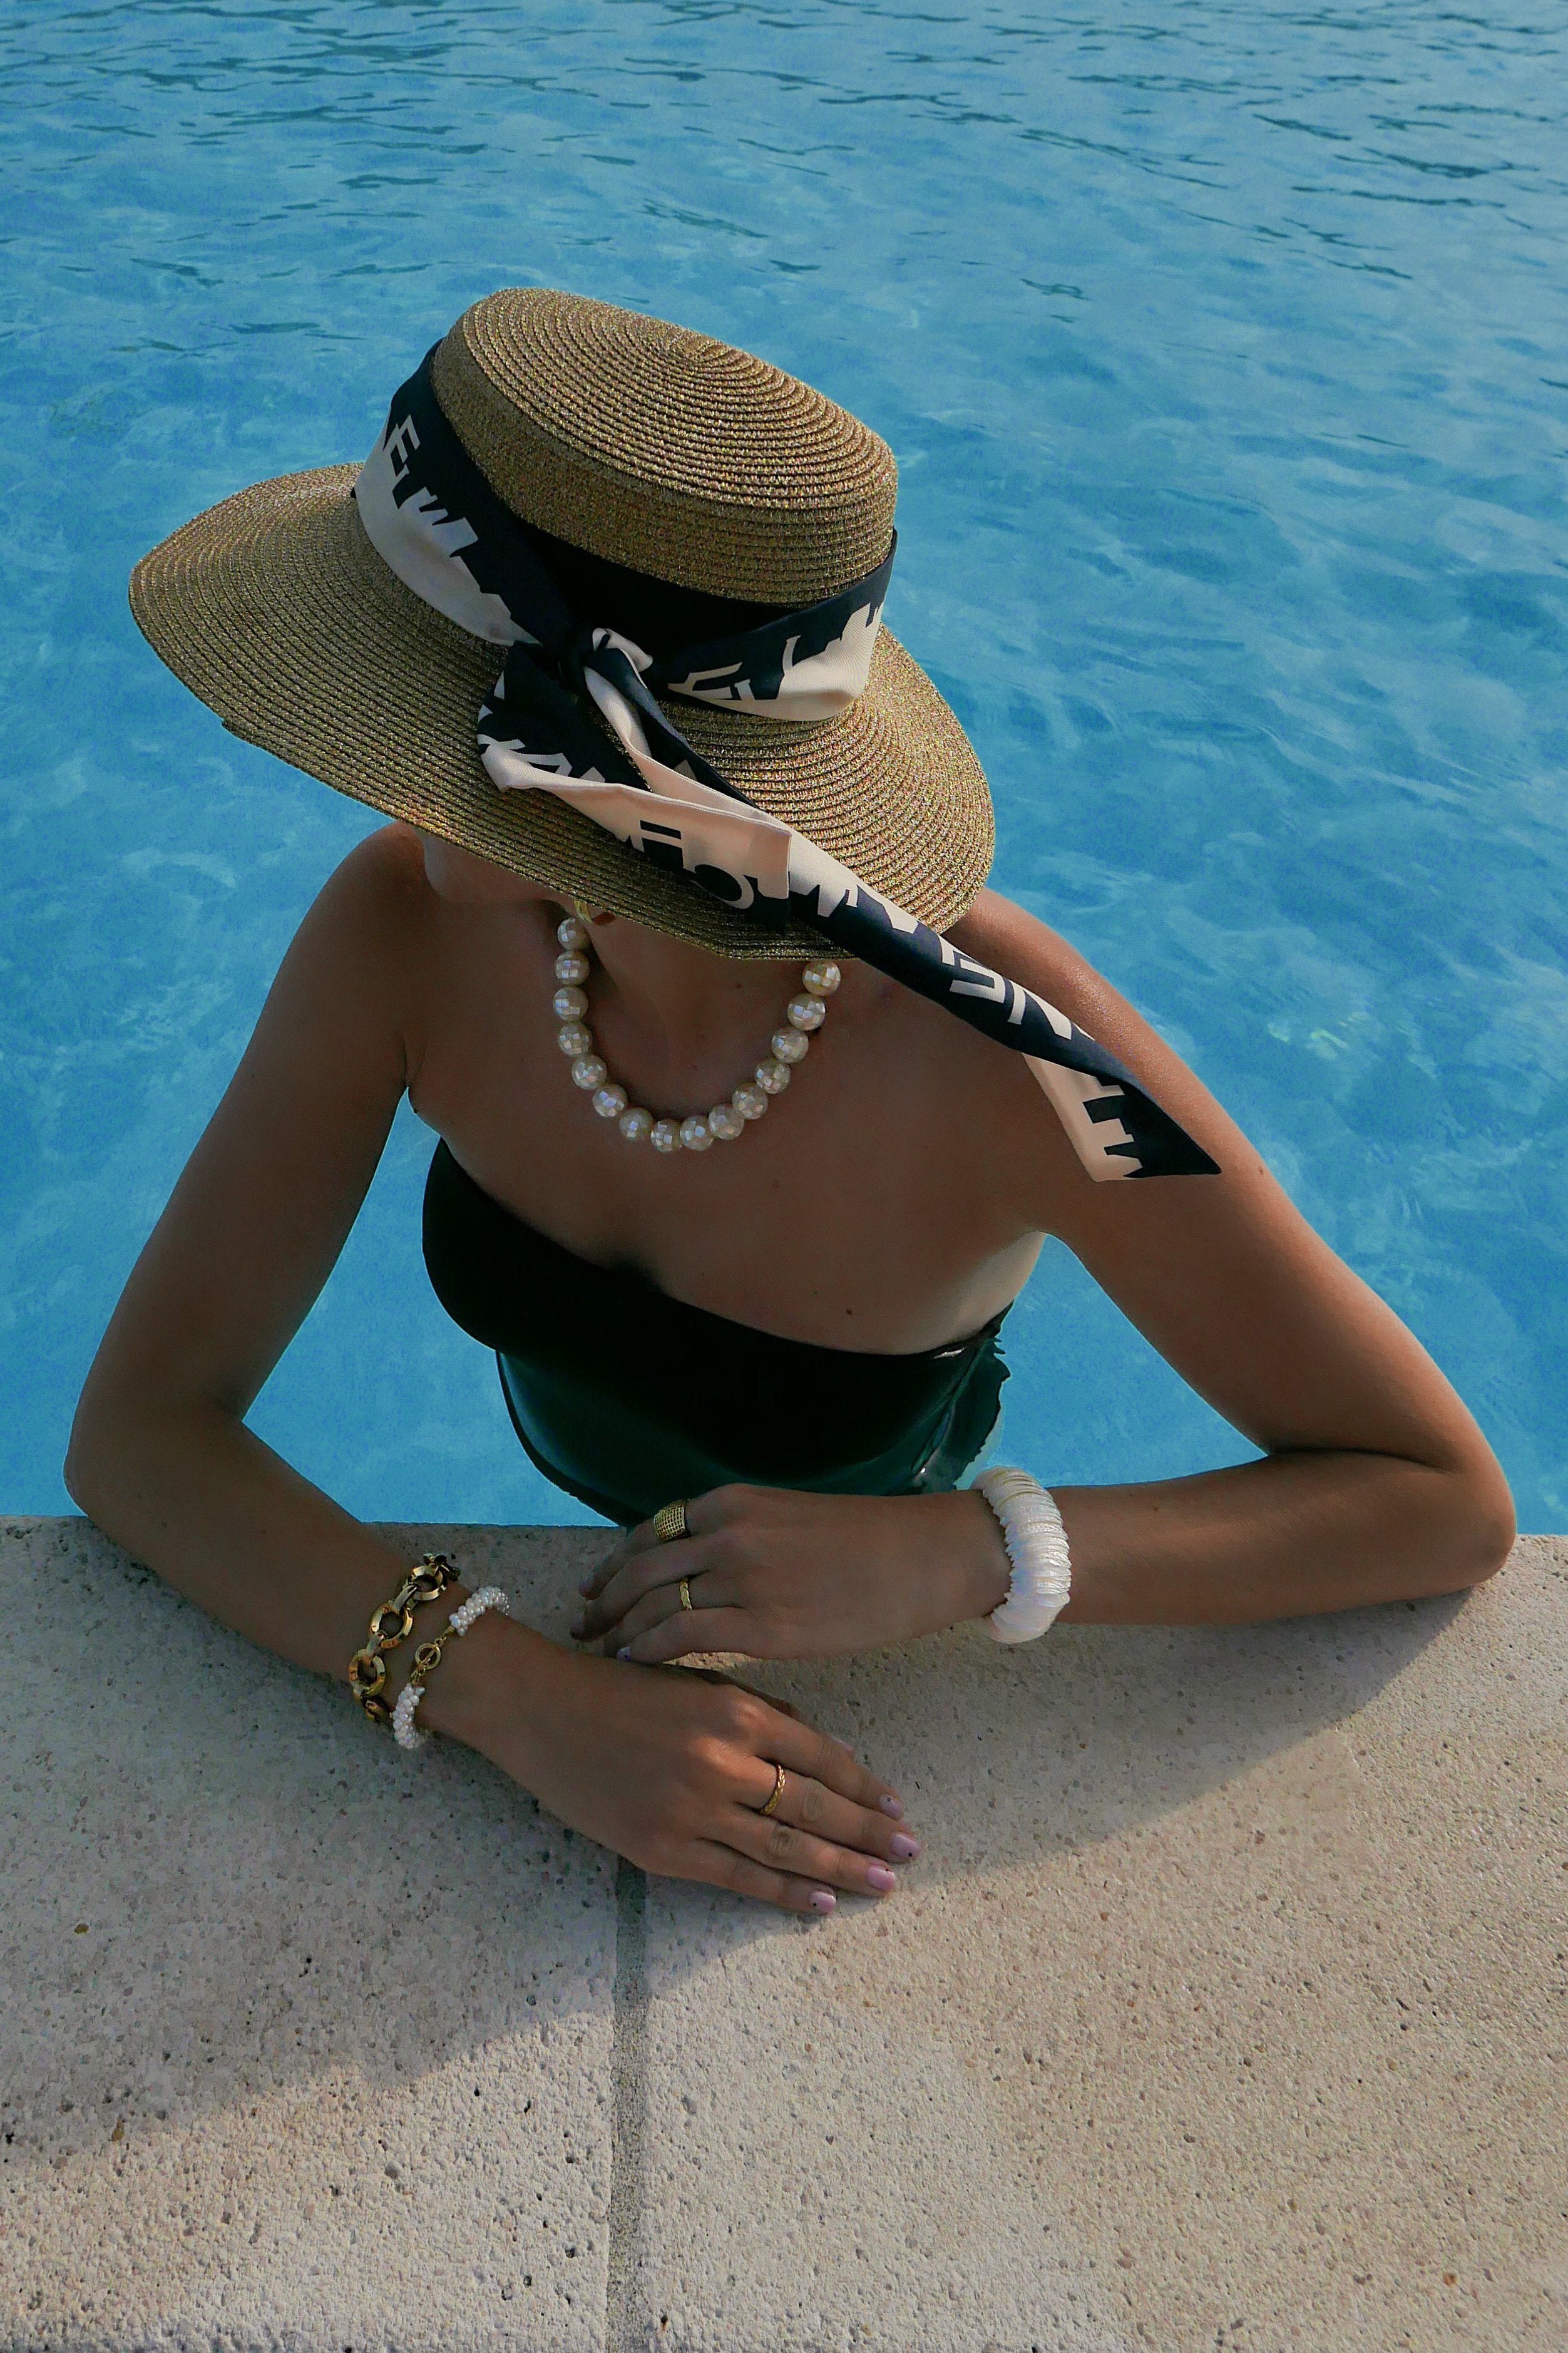 Genny Bracelet - Boutique Minimaliste has waterproof, durable, elegant and vintage inspired jewelry